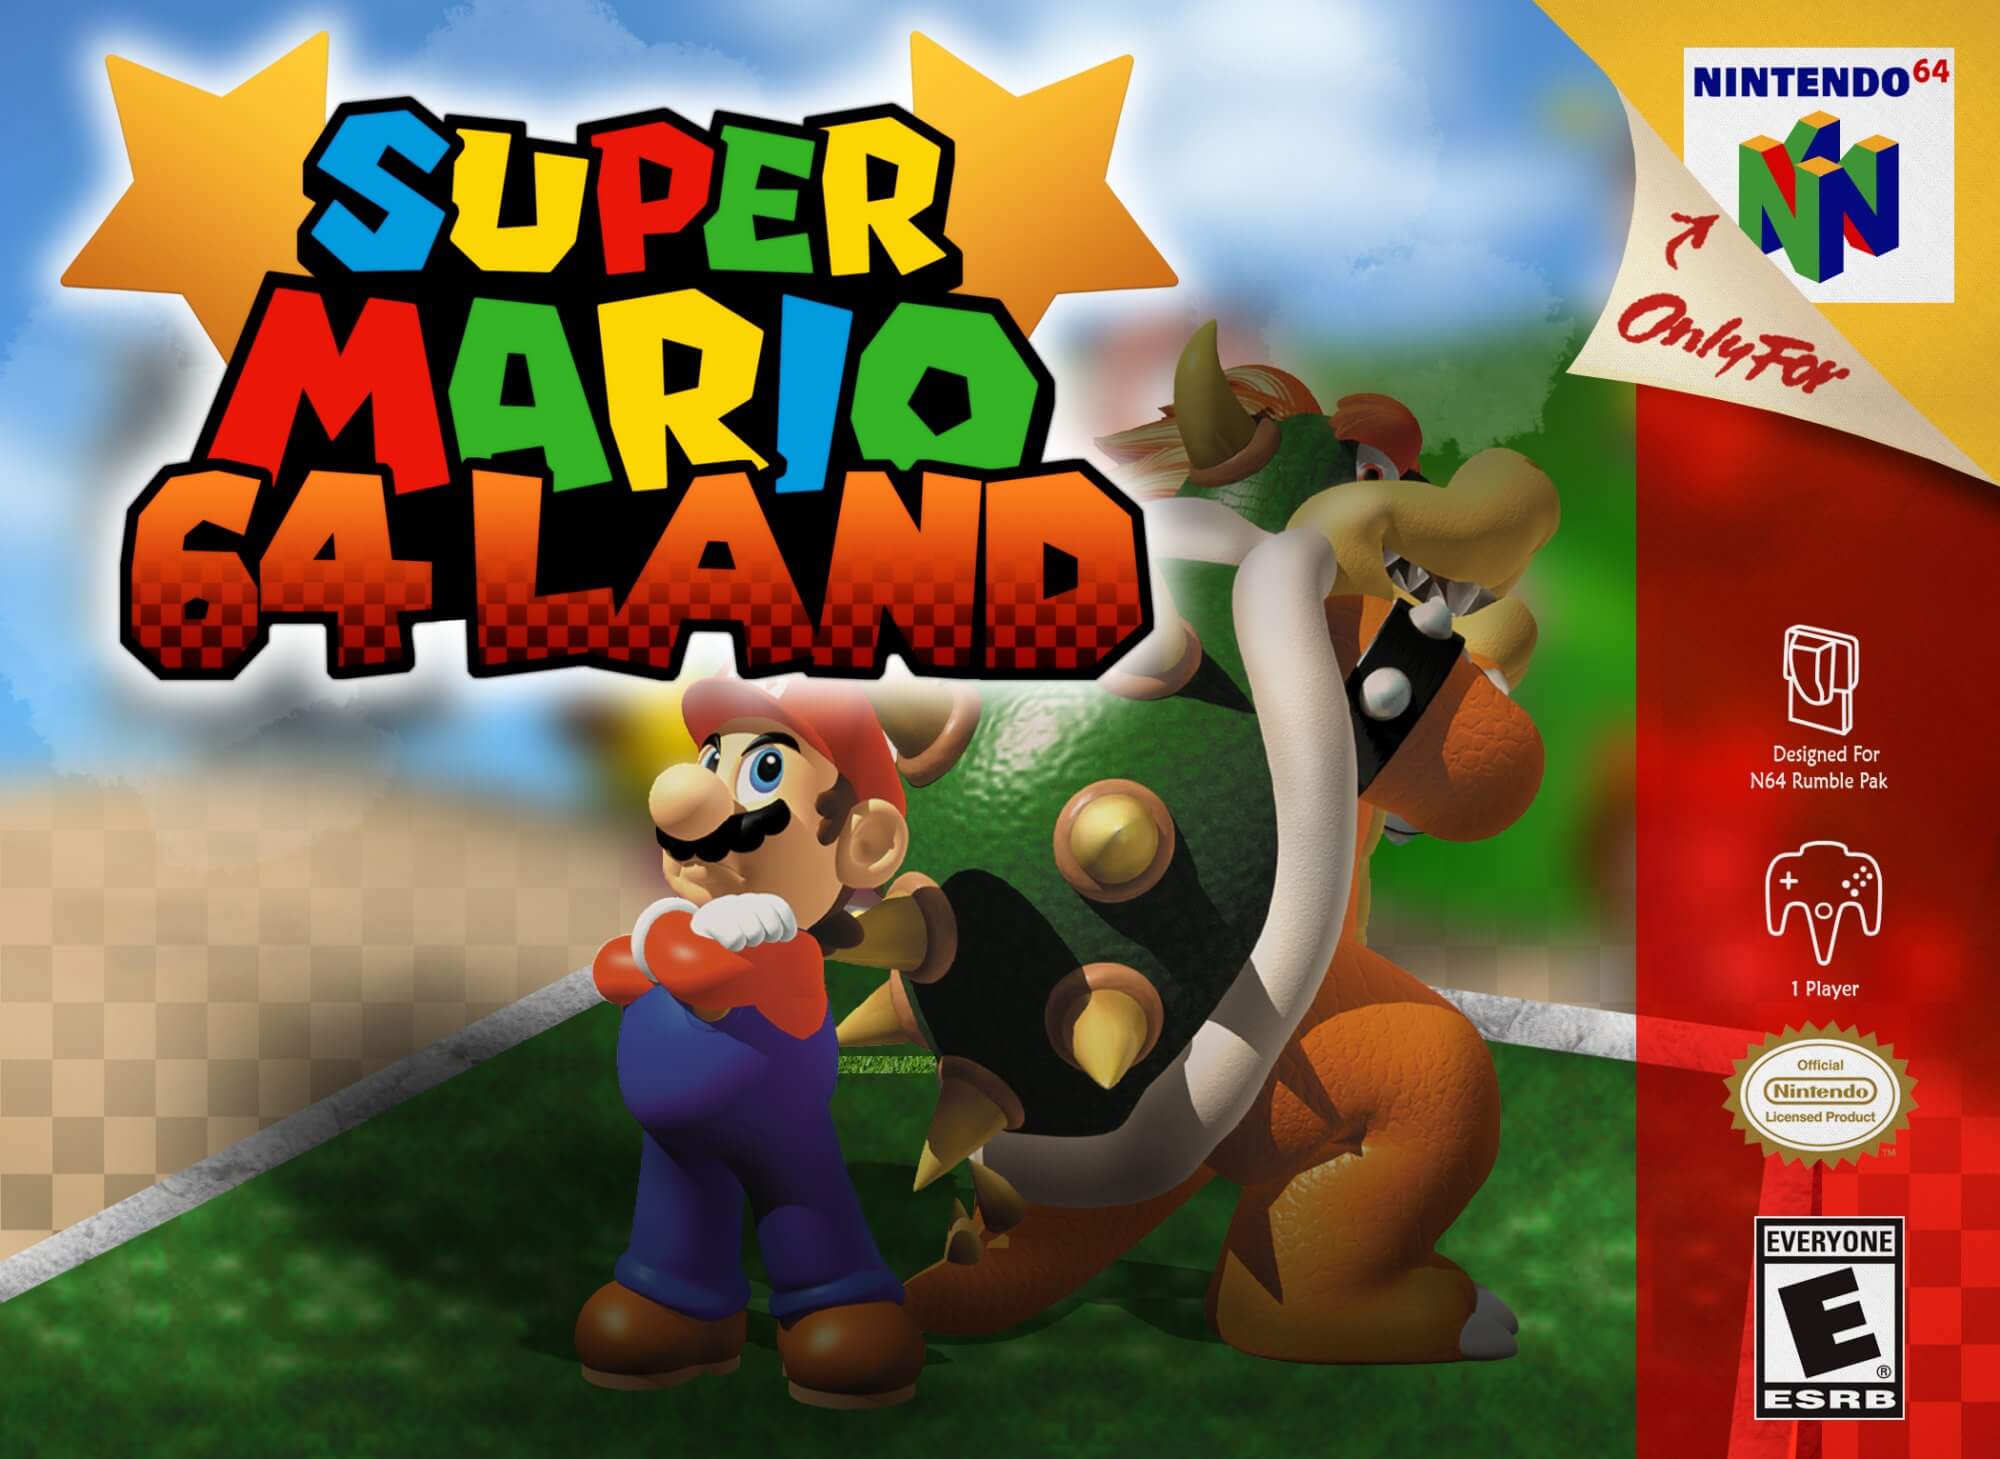 Super Mario 64 Land - Nintendo 64 ROMs Hack - Download